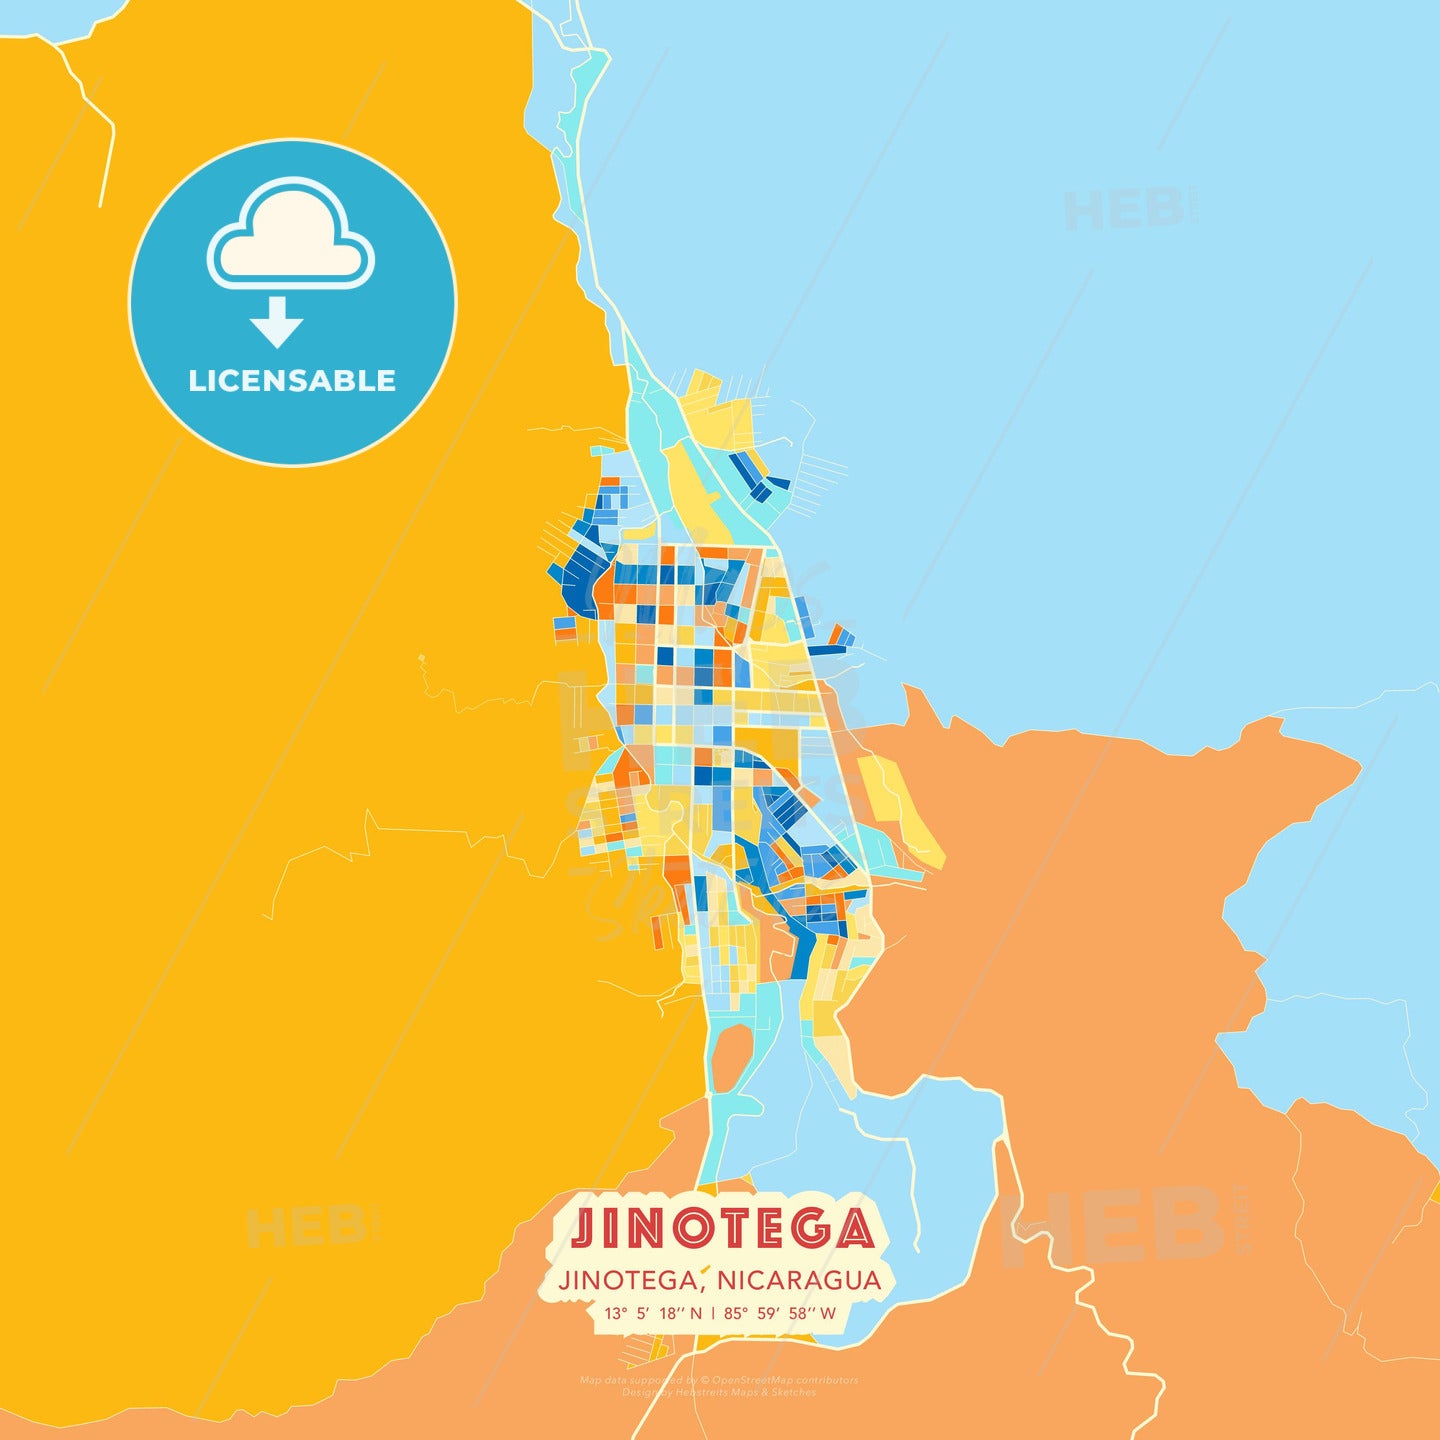 Jinotega, Jinotega, Nicaragua, map - HEBSTREITS Sketches